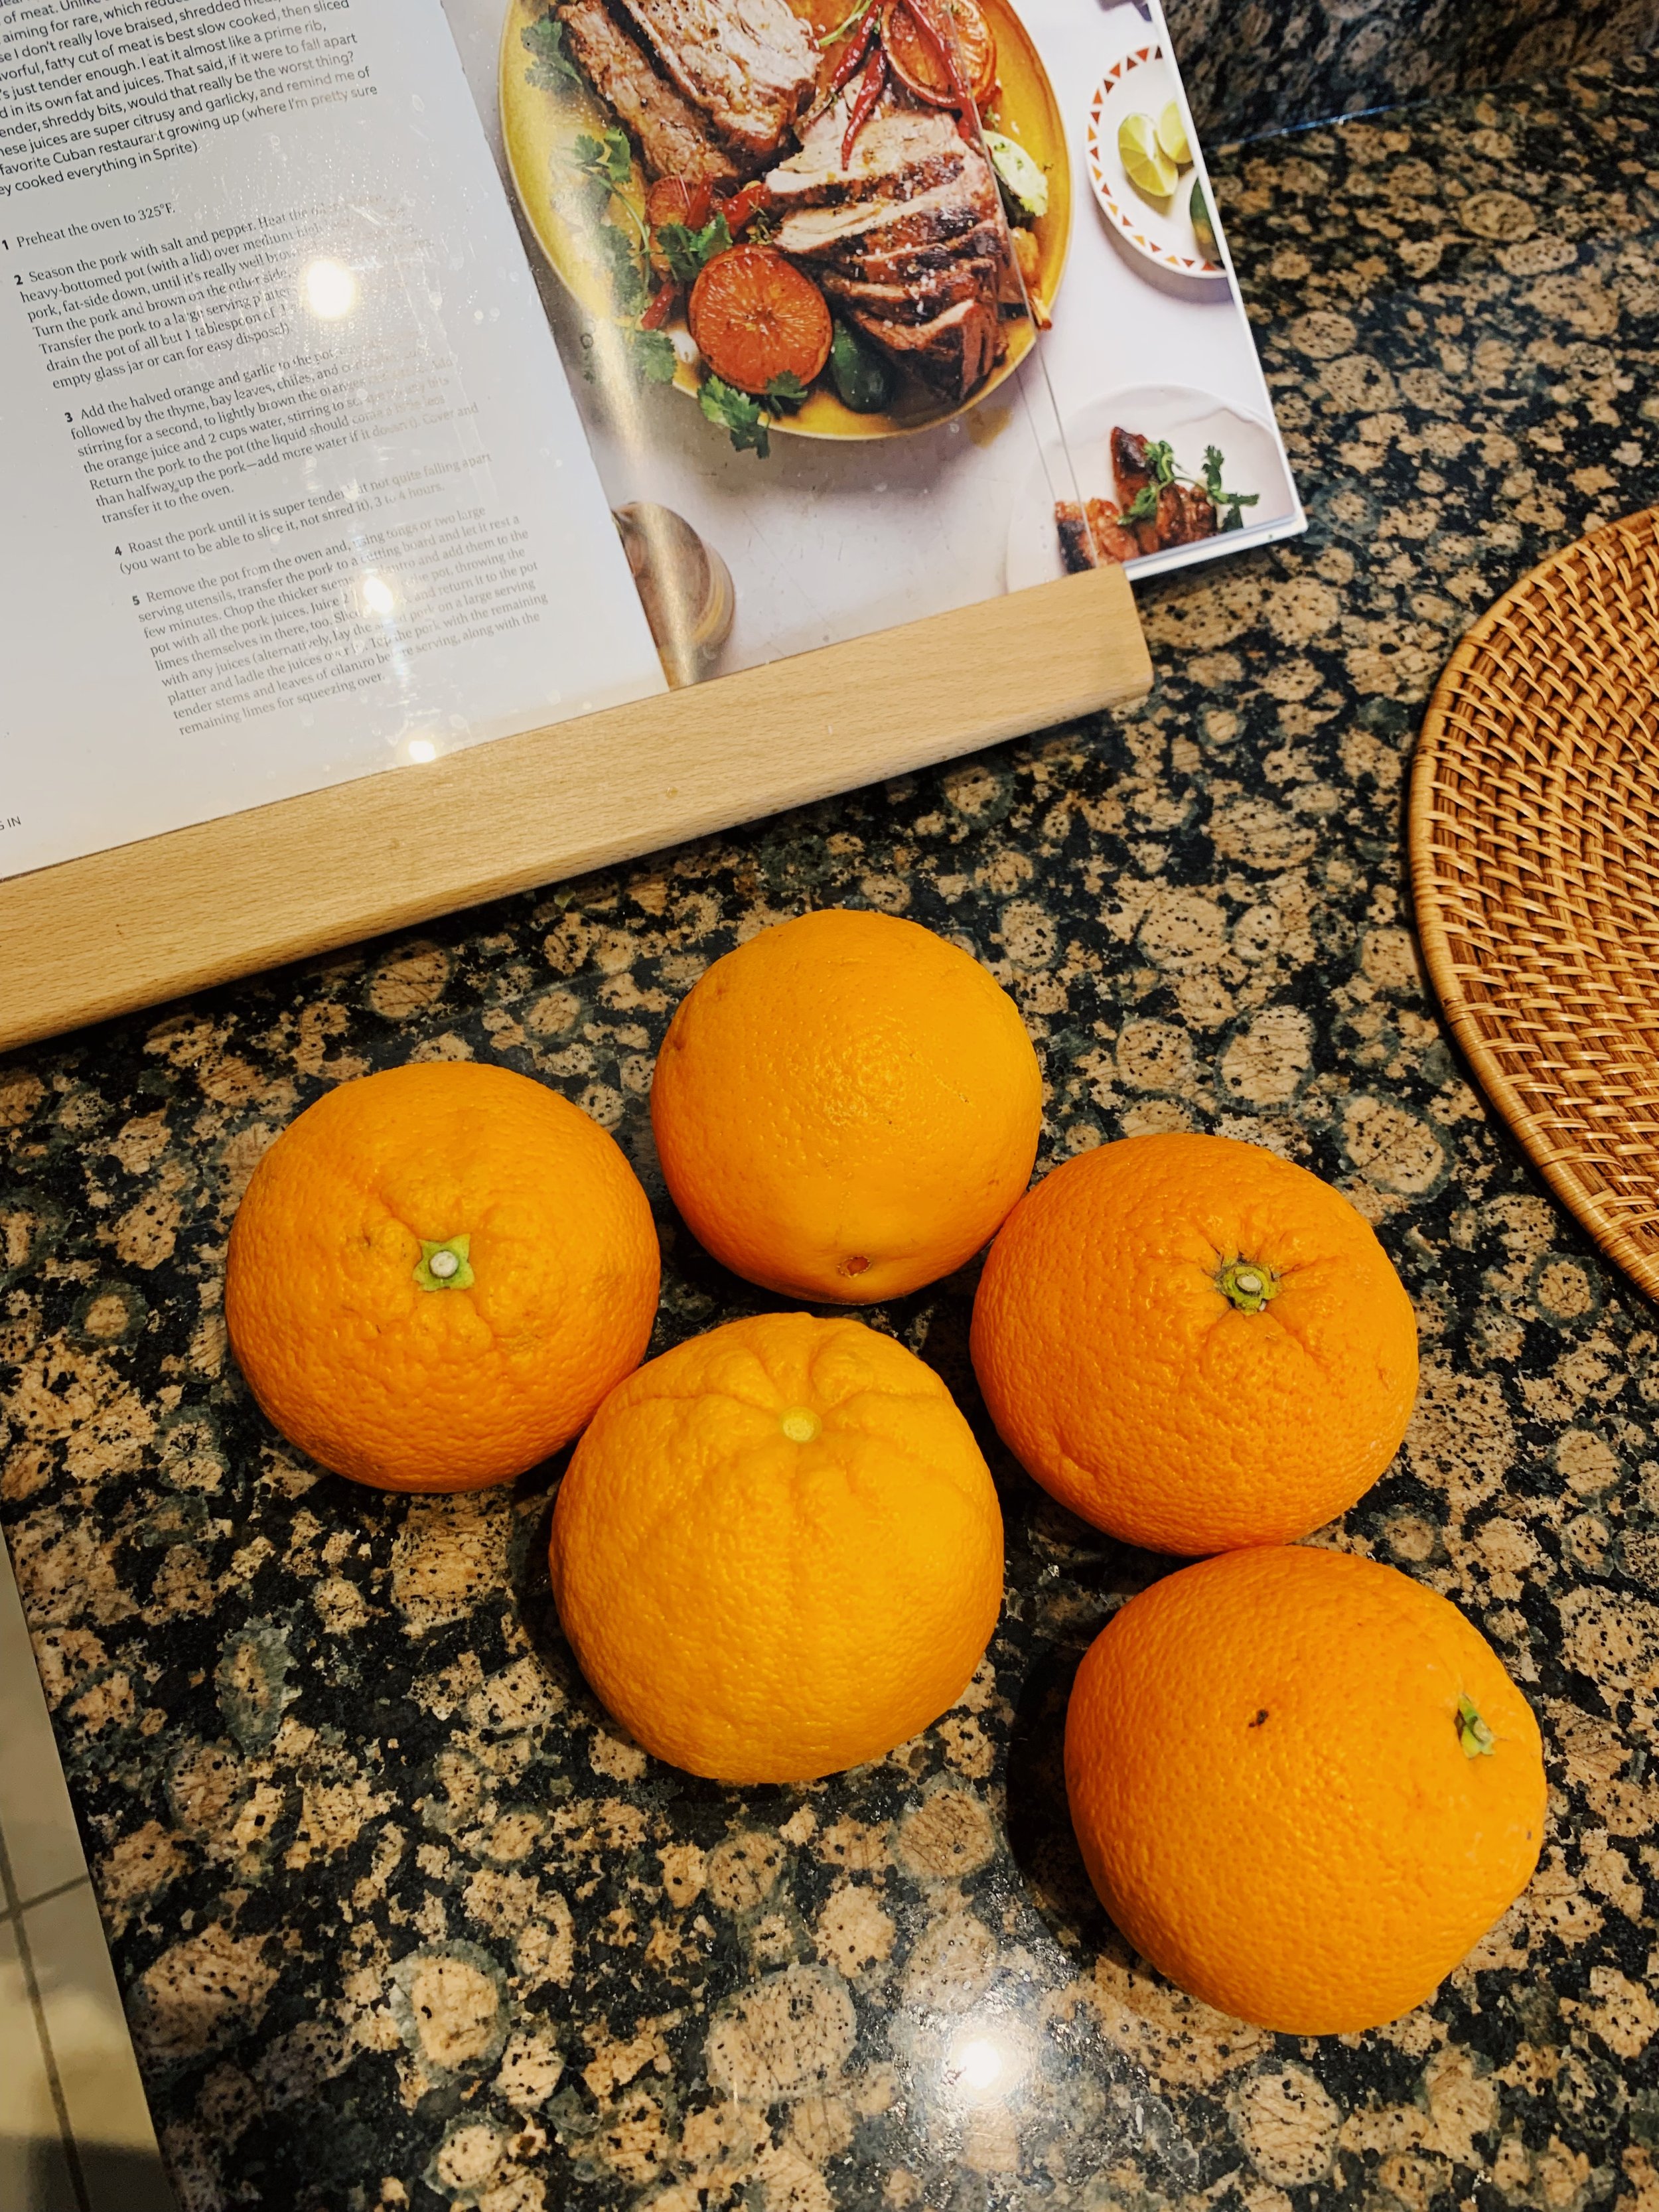 slow-roasted-pork-shoulder-garlic-citrus-cilantro-alison-roman-orange.jpg